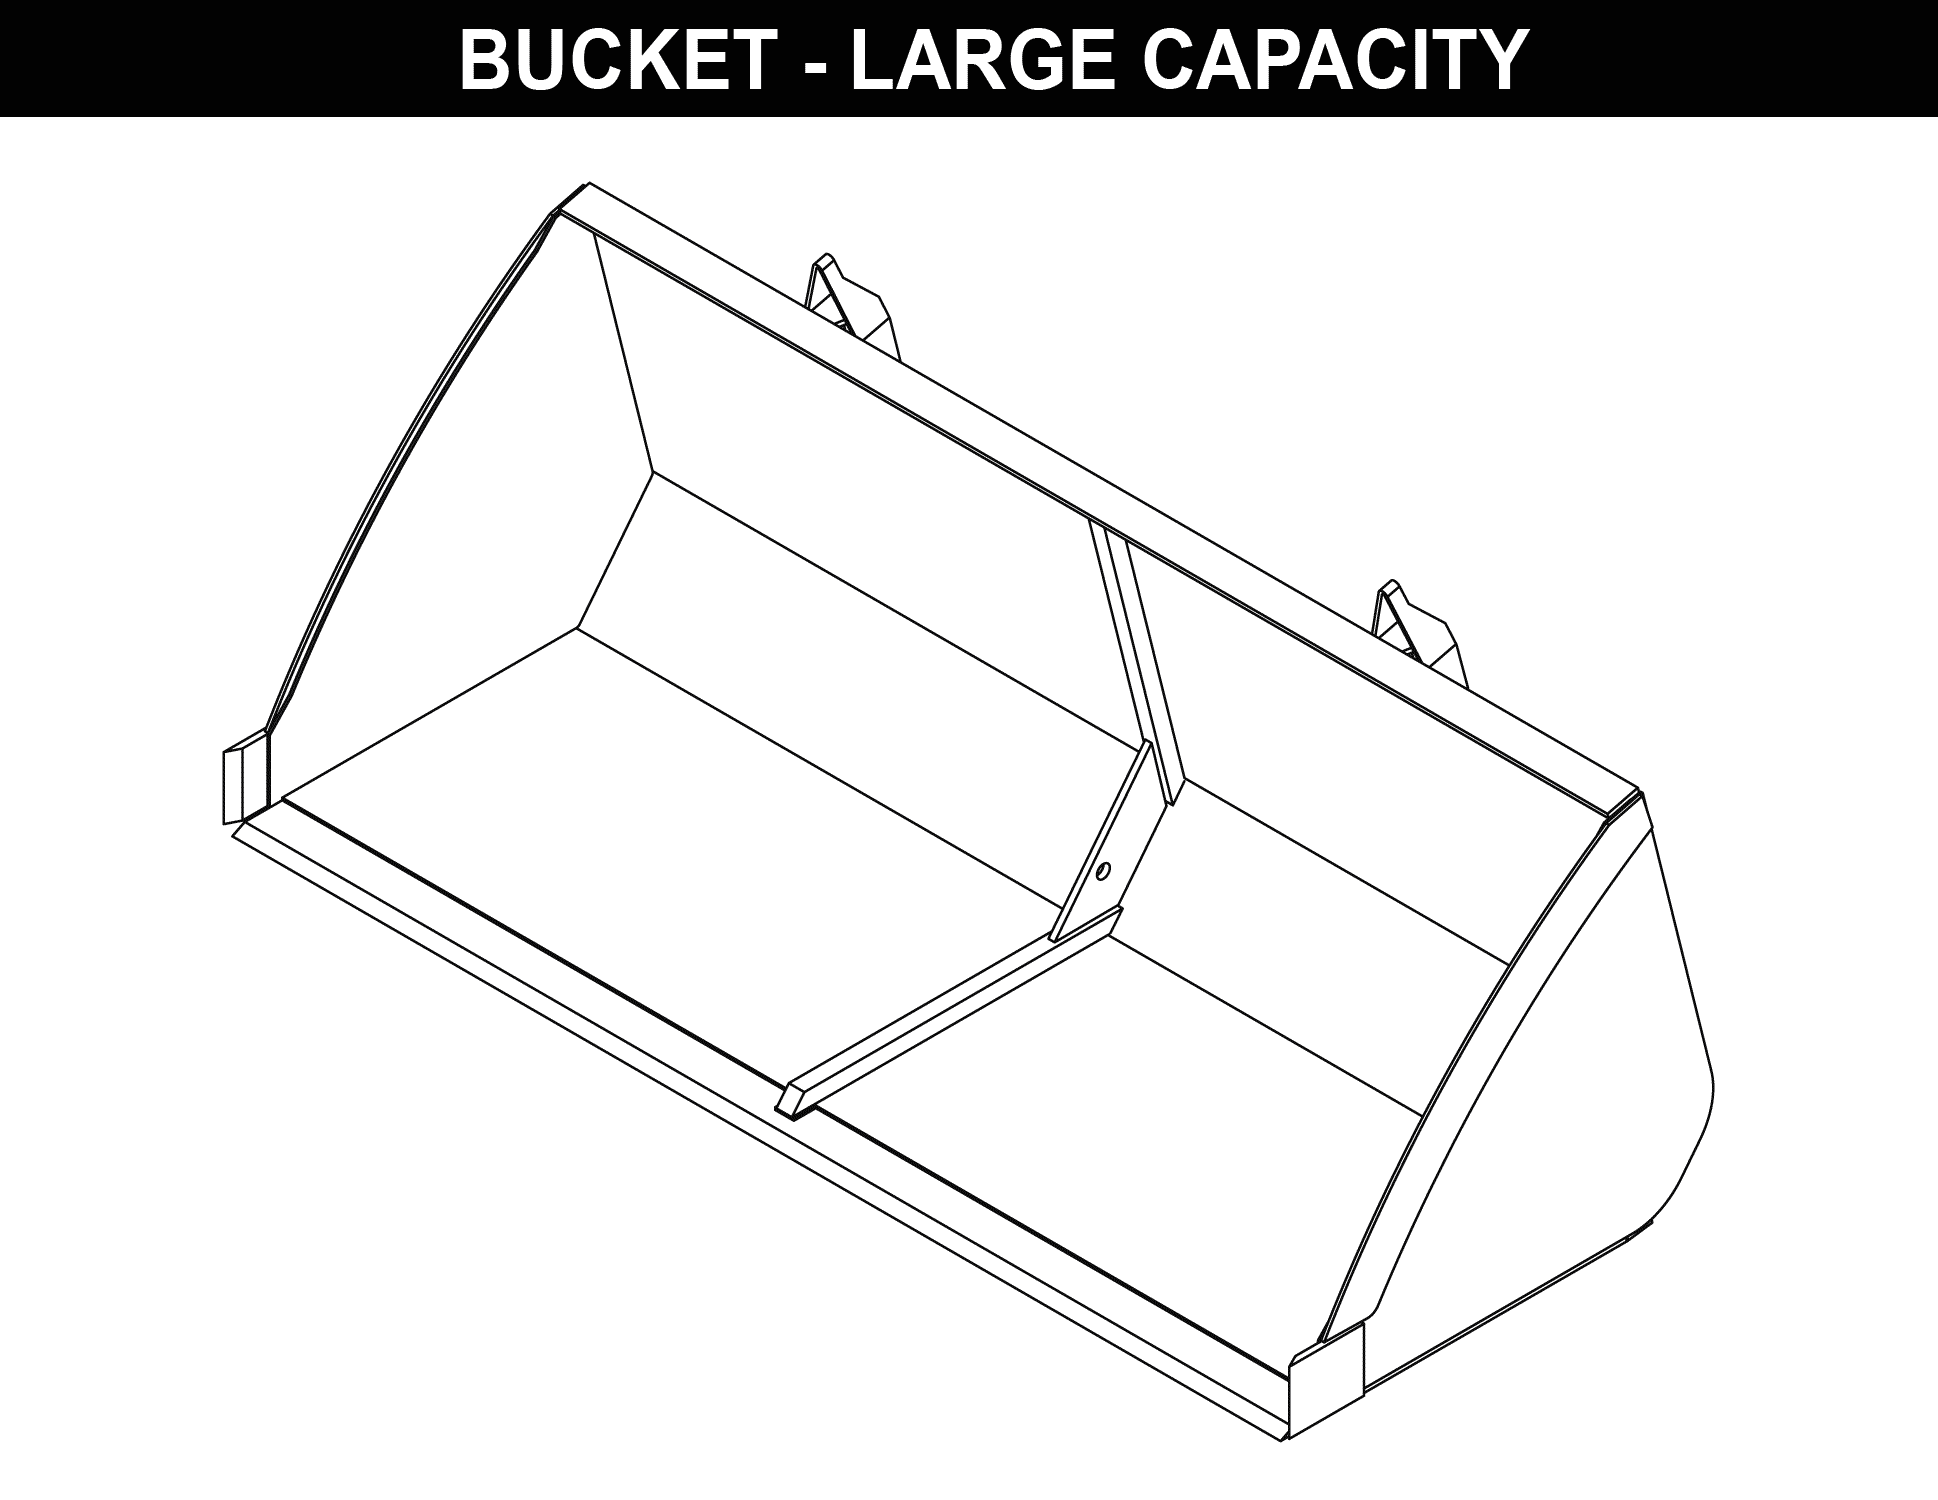 Bucket-Large Capacity